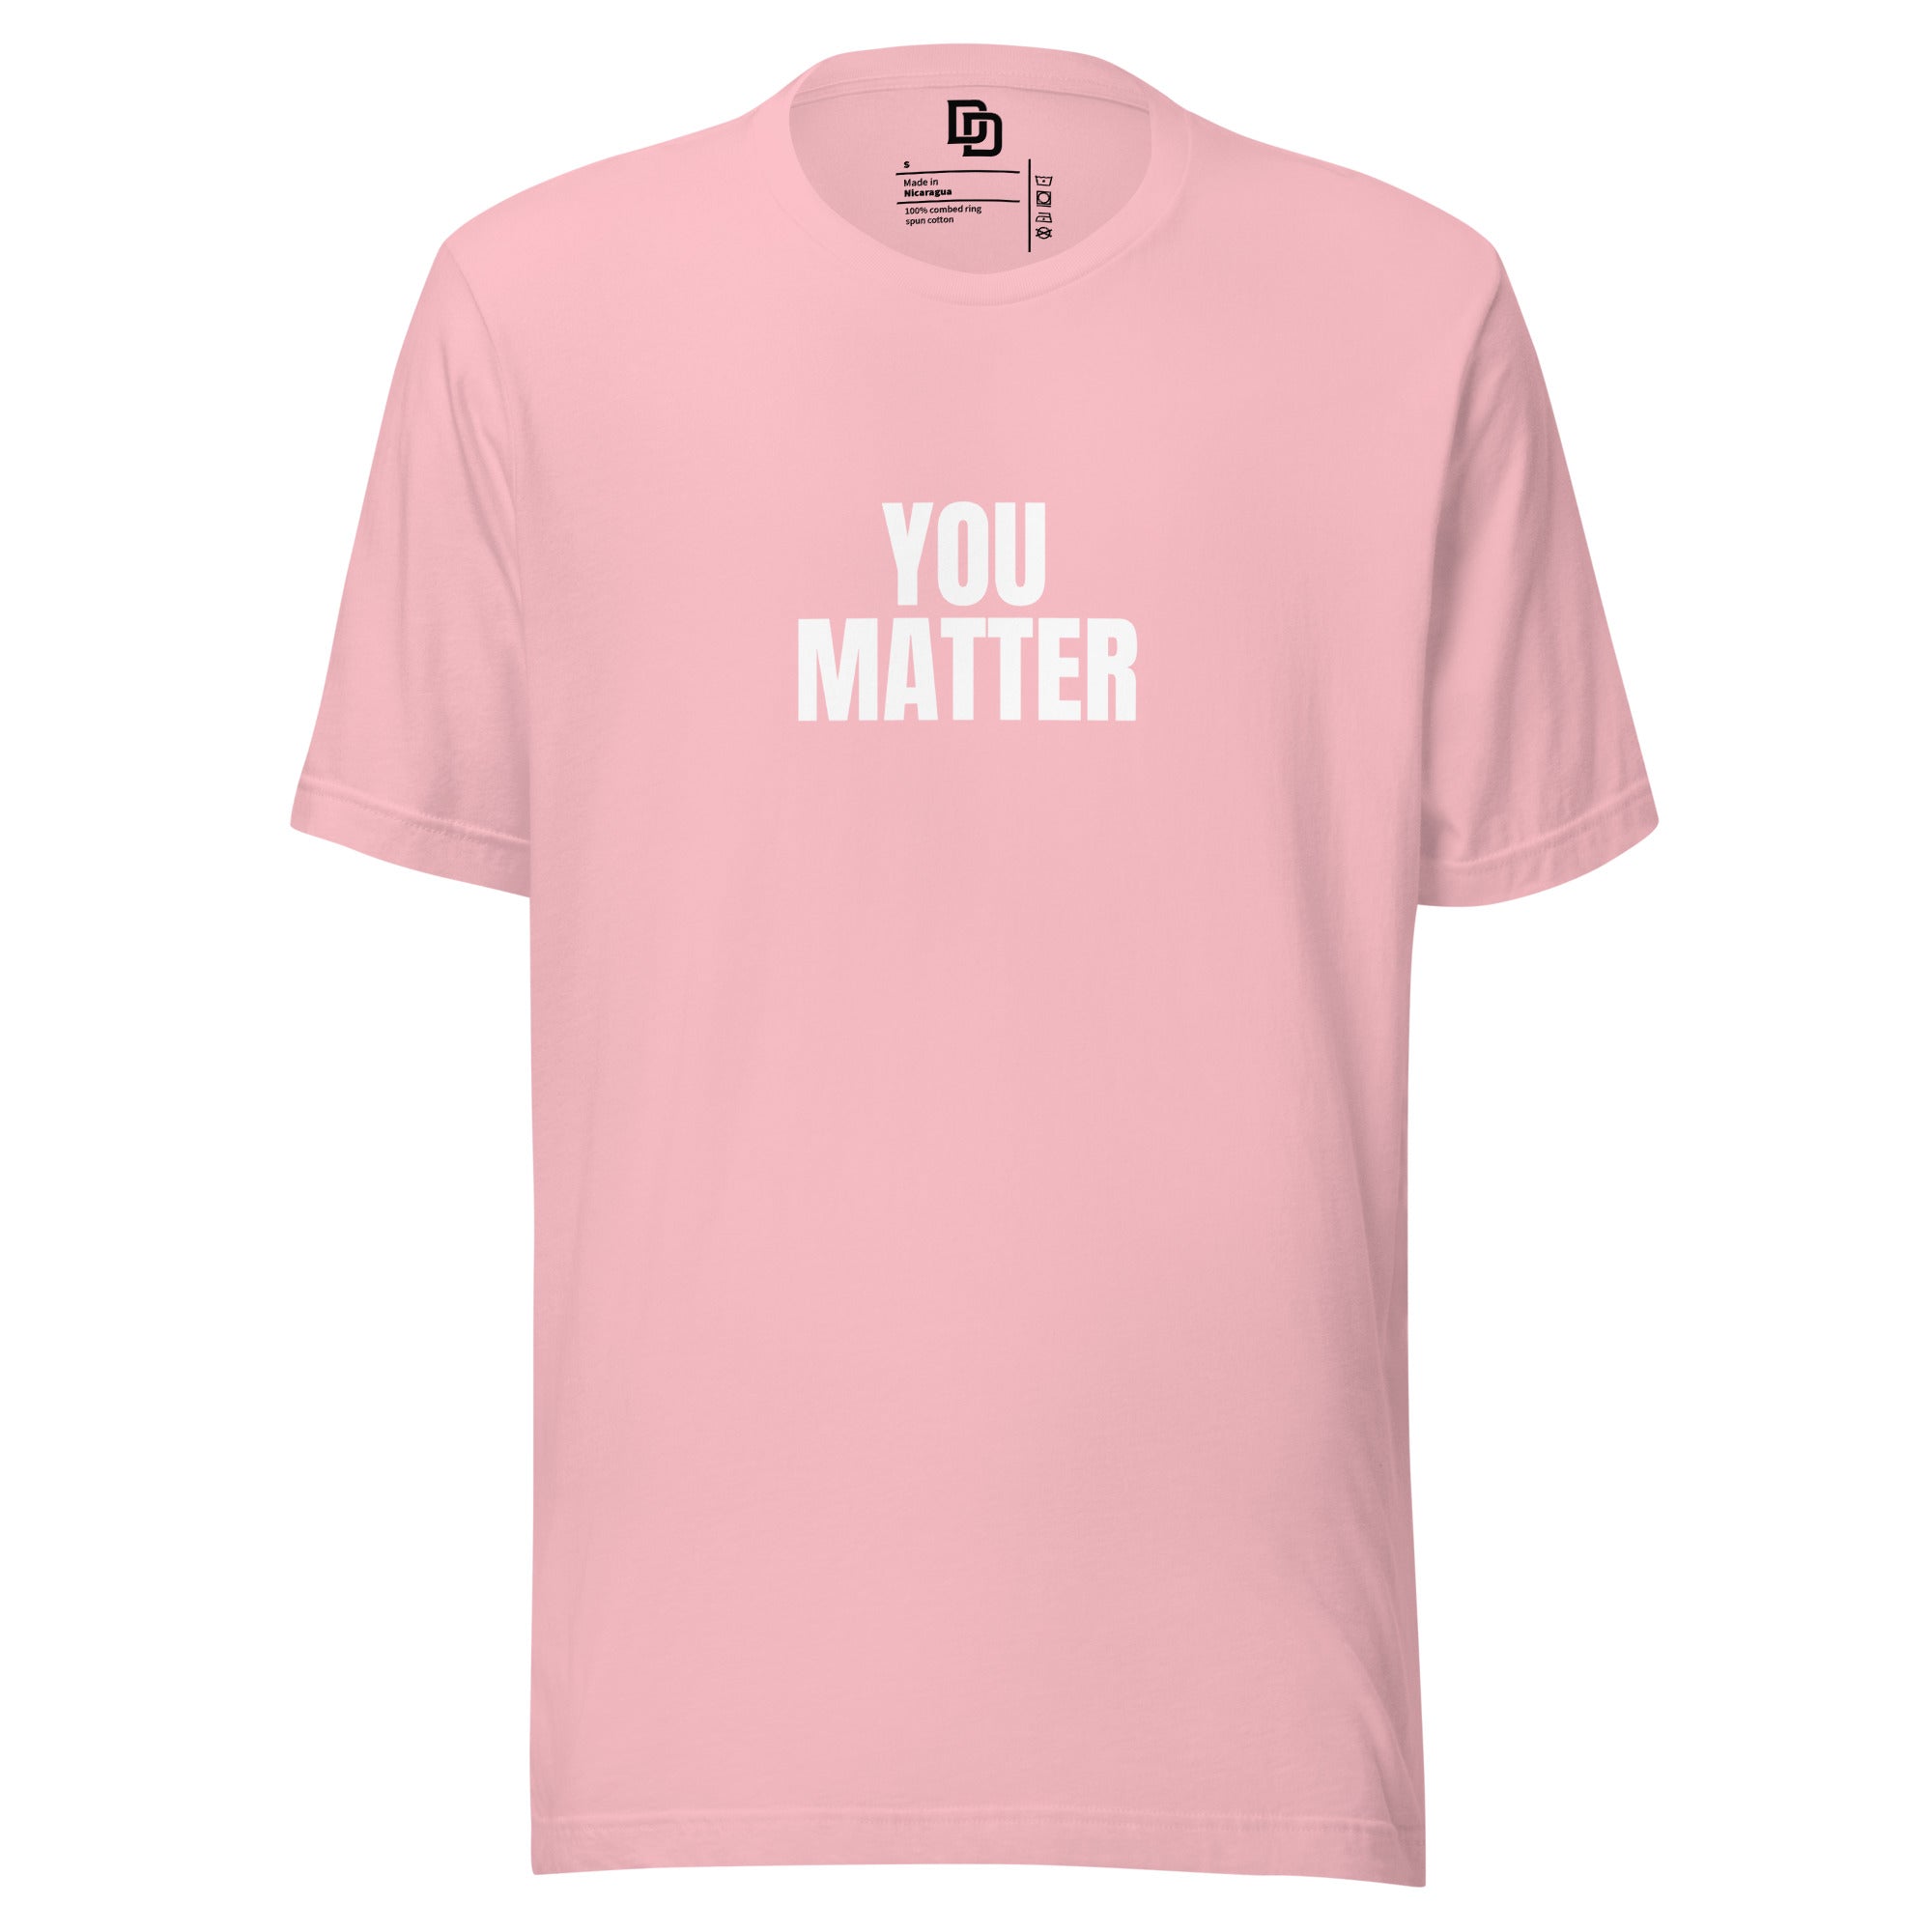 You Matter Version 2 Tee